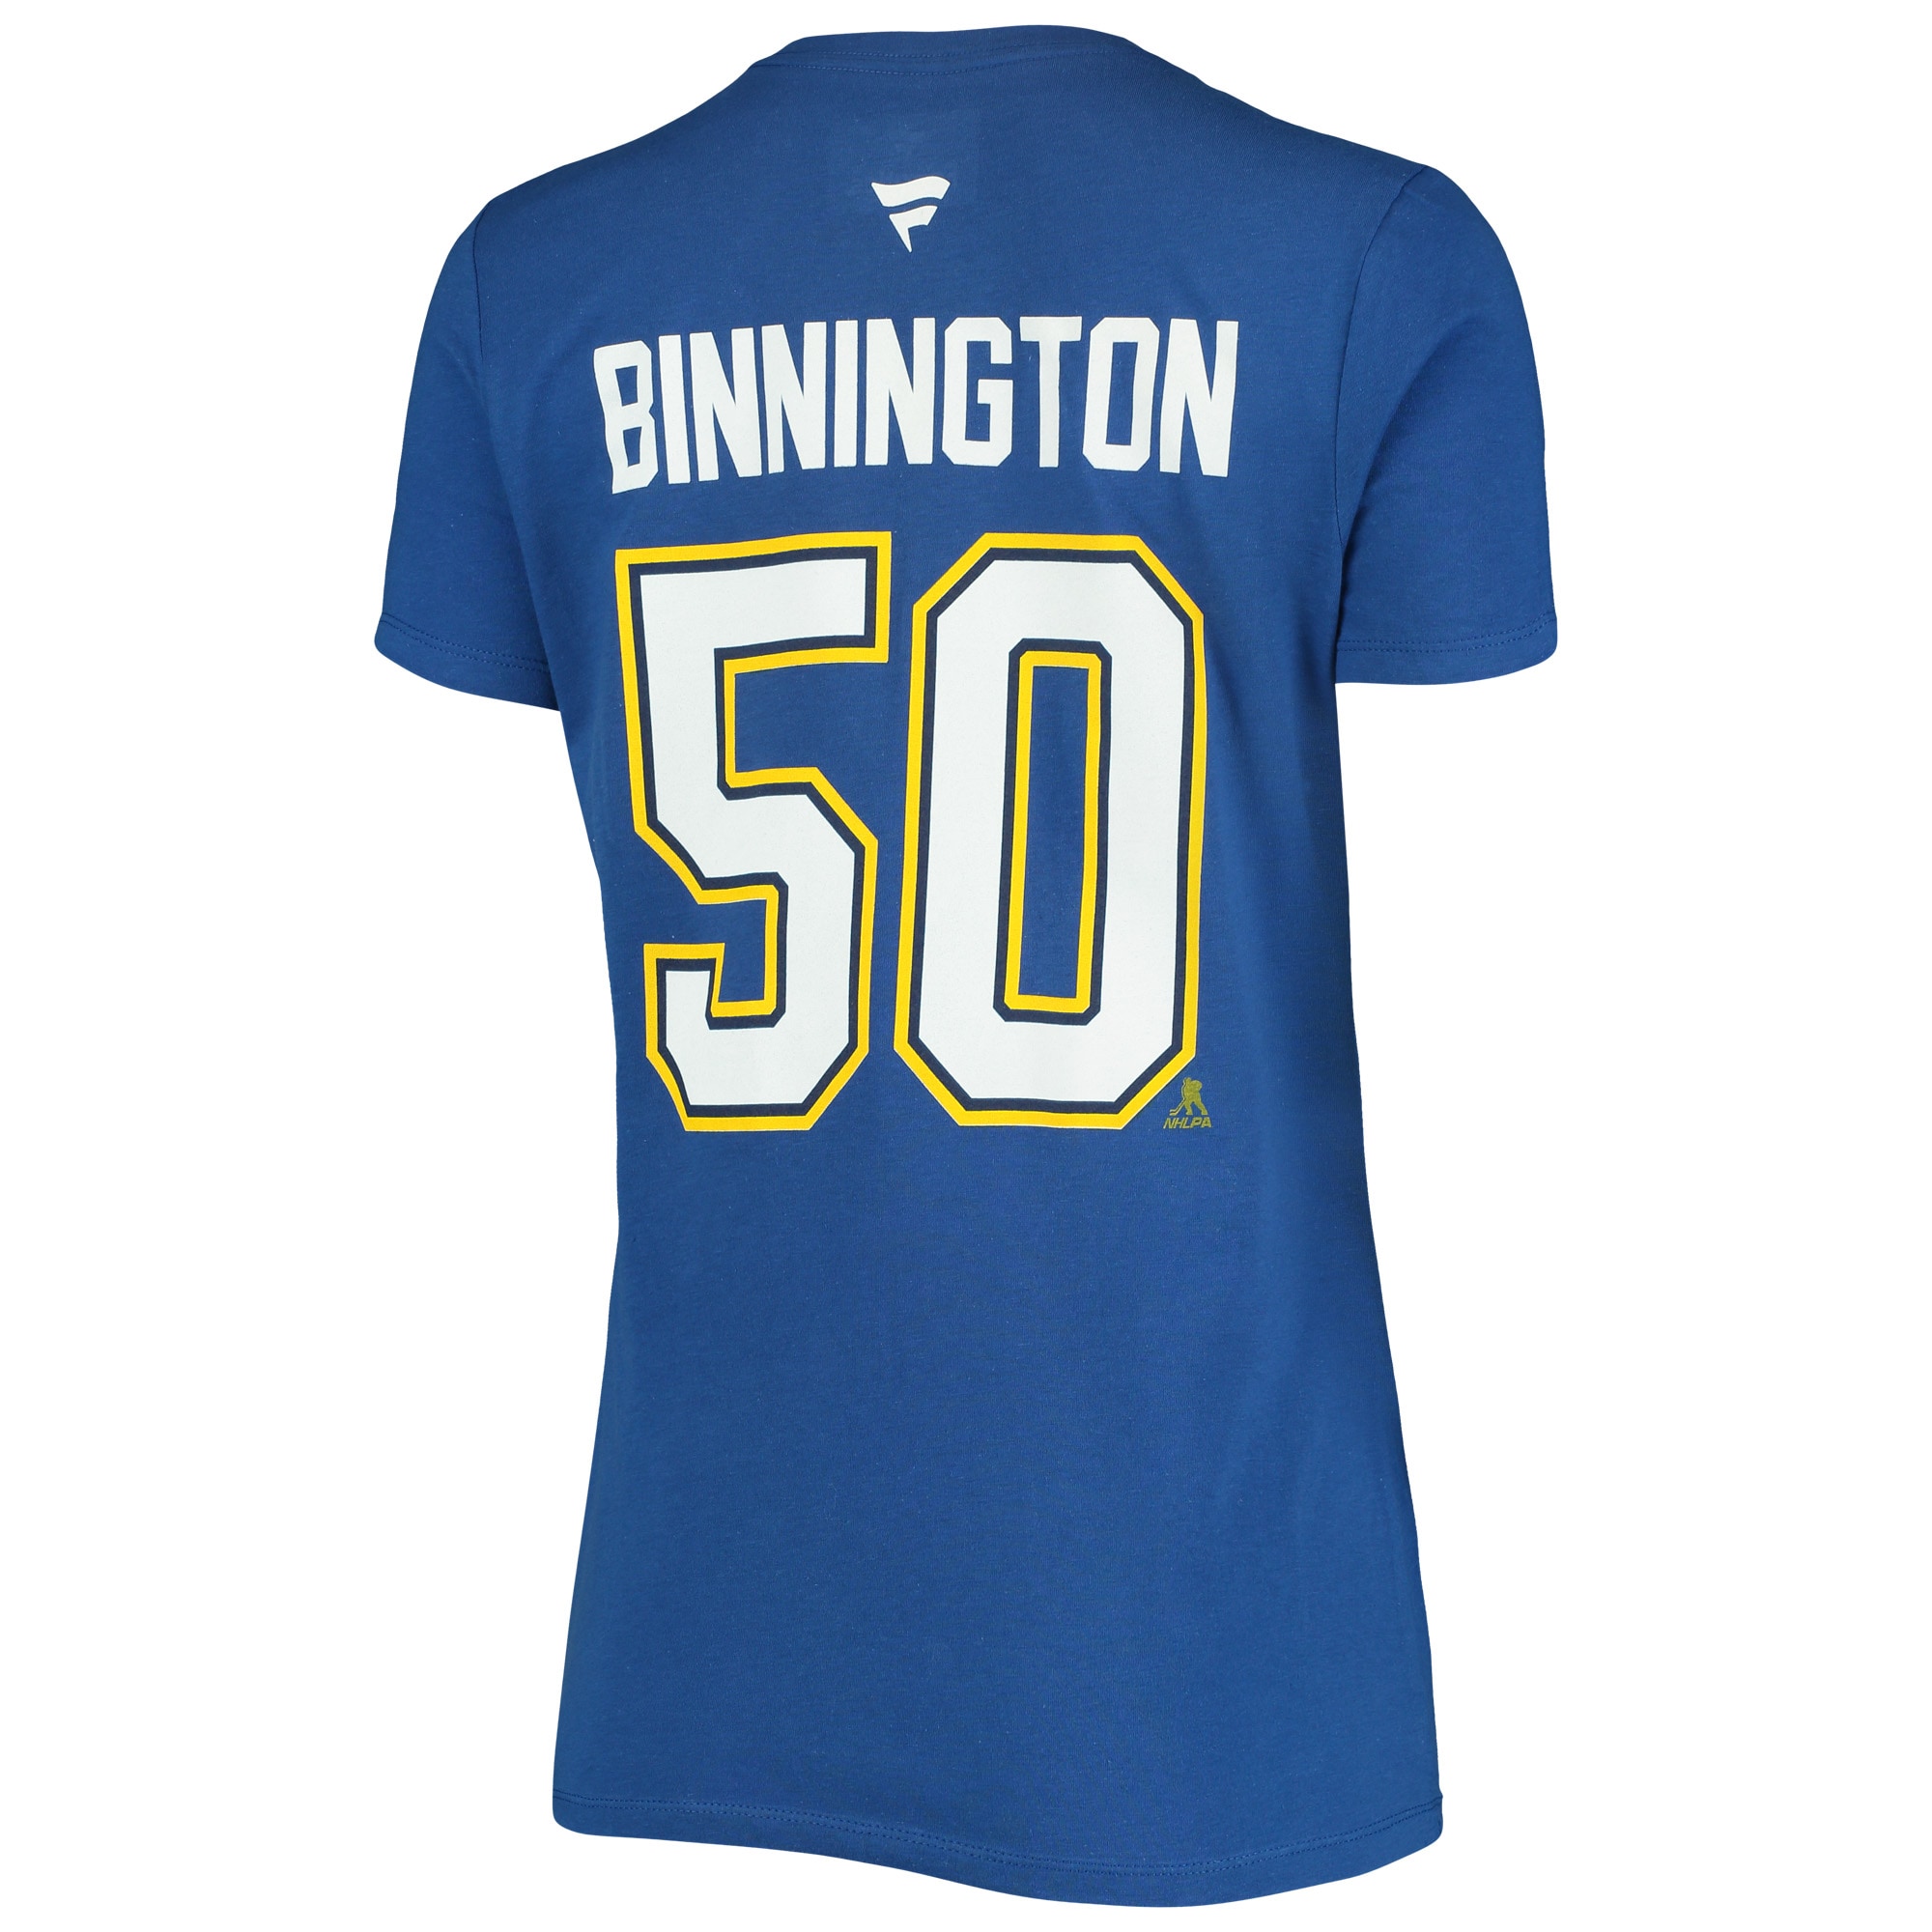 Women's Fanatics Branded Jordan Binnington Blue St. Louis Blues Team Authentic Stack Name & Number V-Neck T-Shirt - image 3 of 3